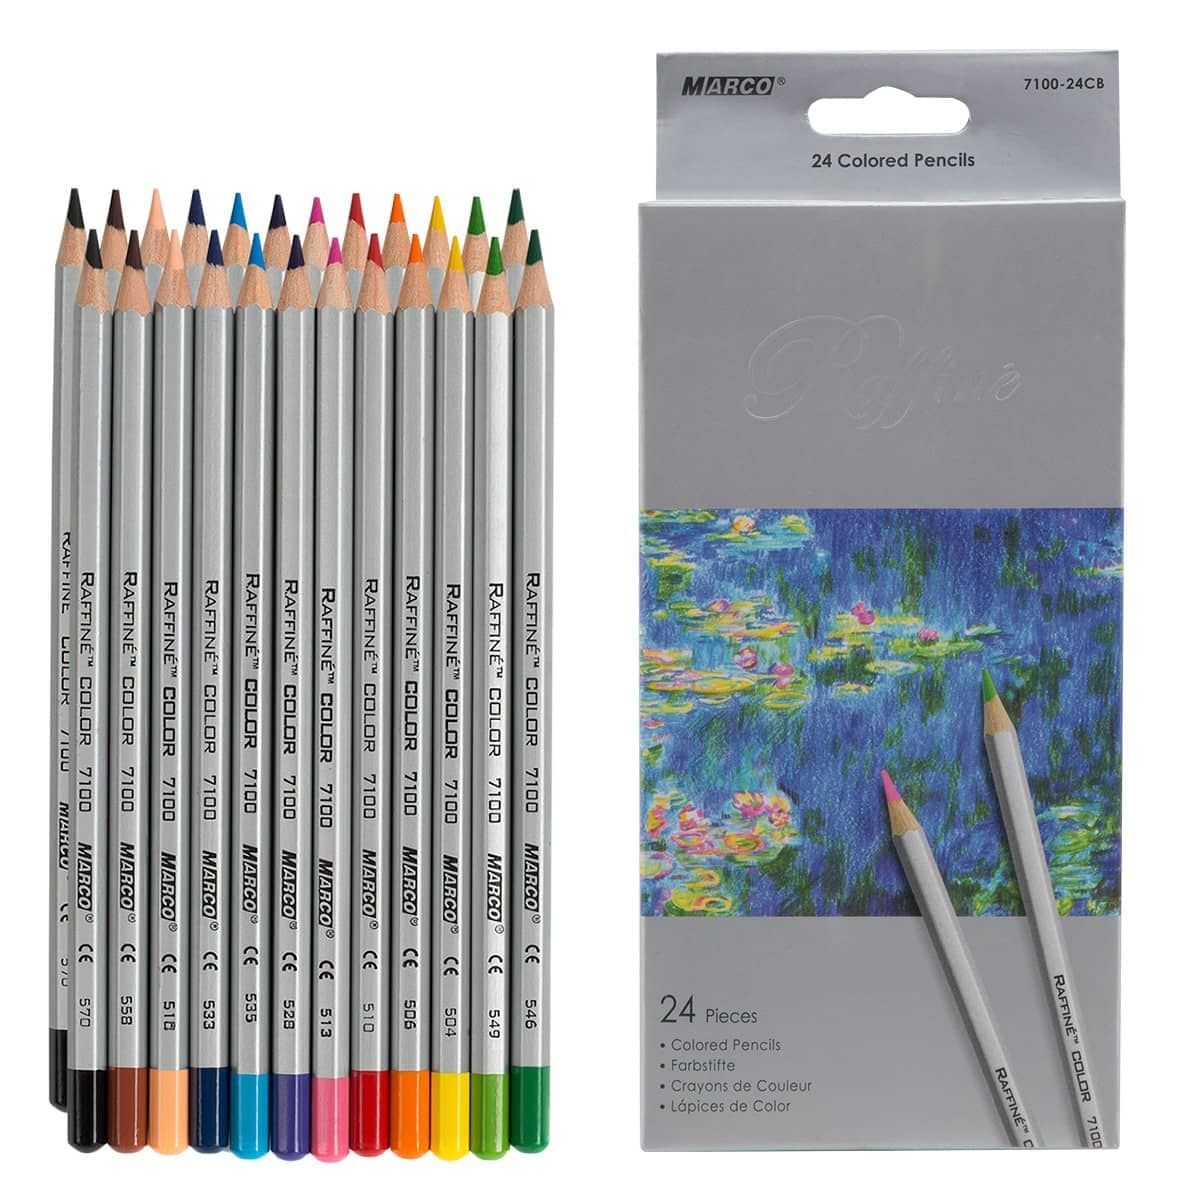 Strathmore 400 Series 9x12 Sketch Pad Set, 36 Colored Pencils